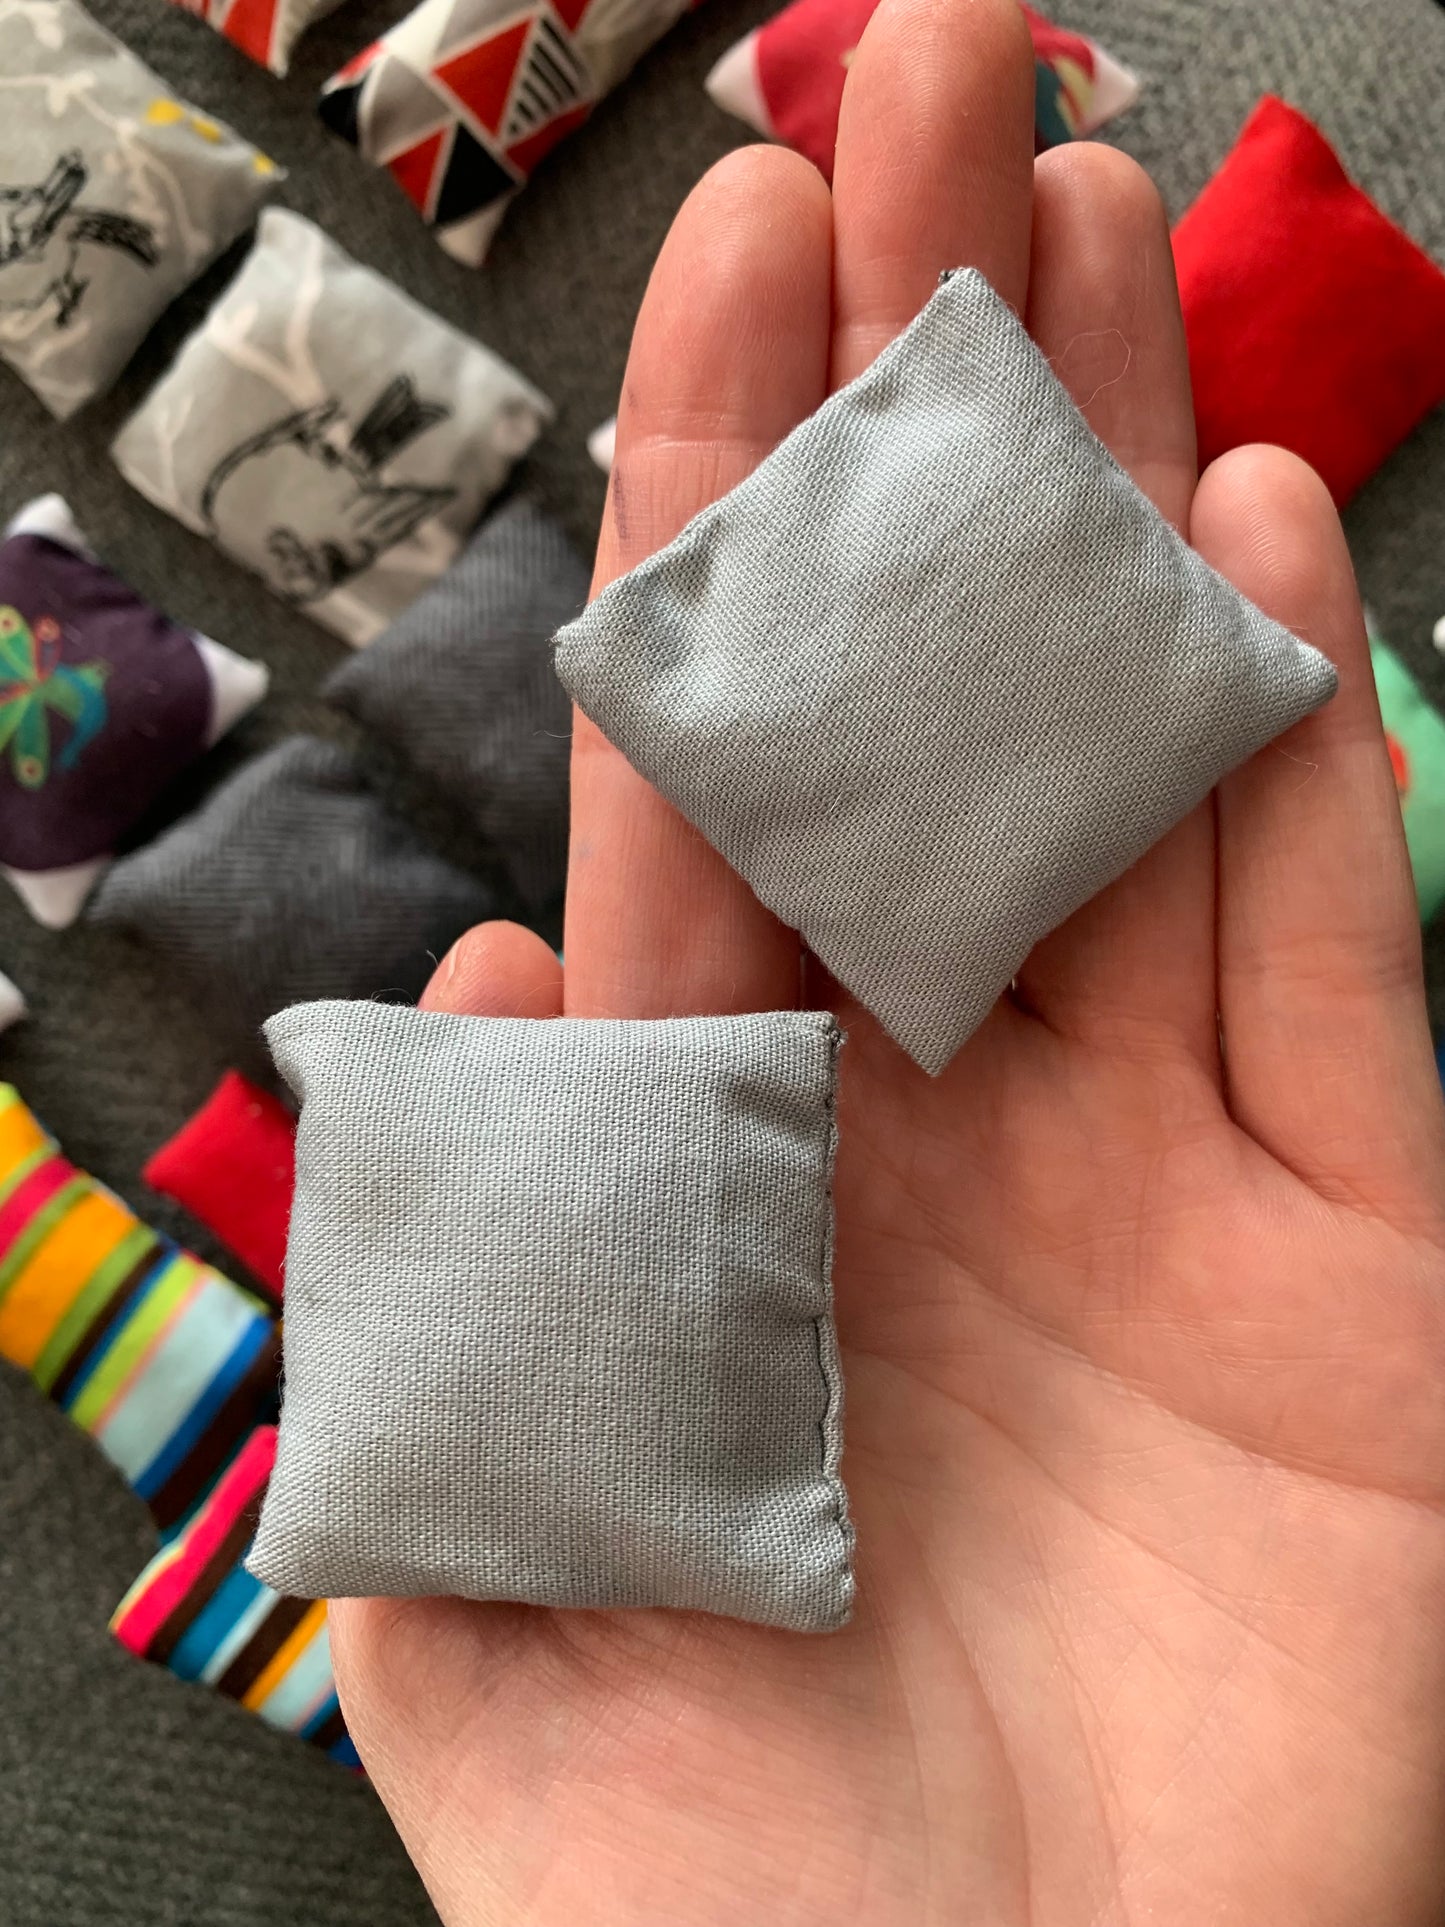 Dollhouse Pillows - Pair of Miniature Throw Pillows 1:12 Scale